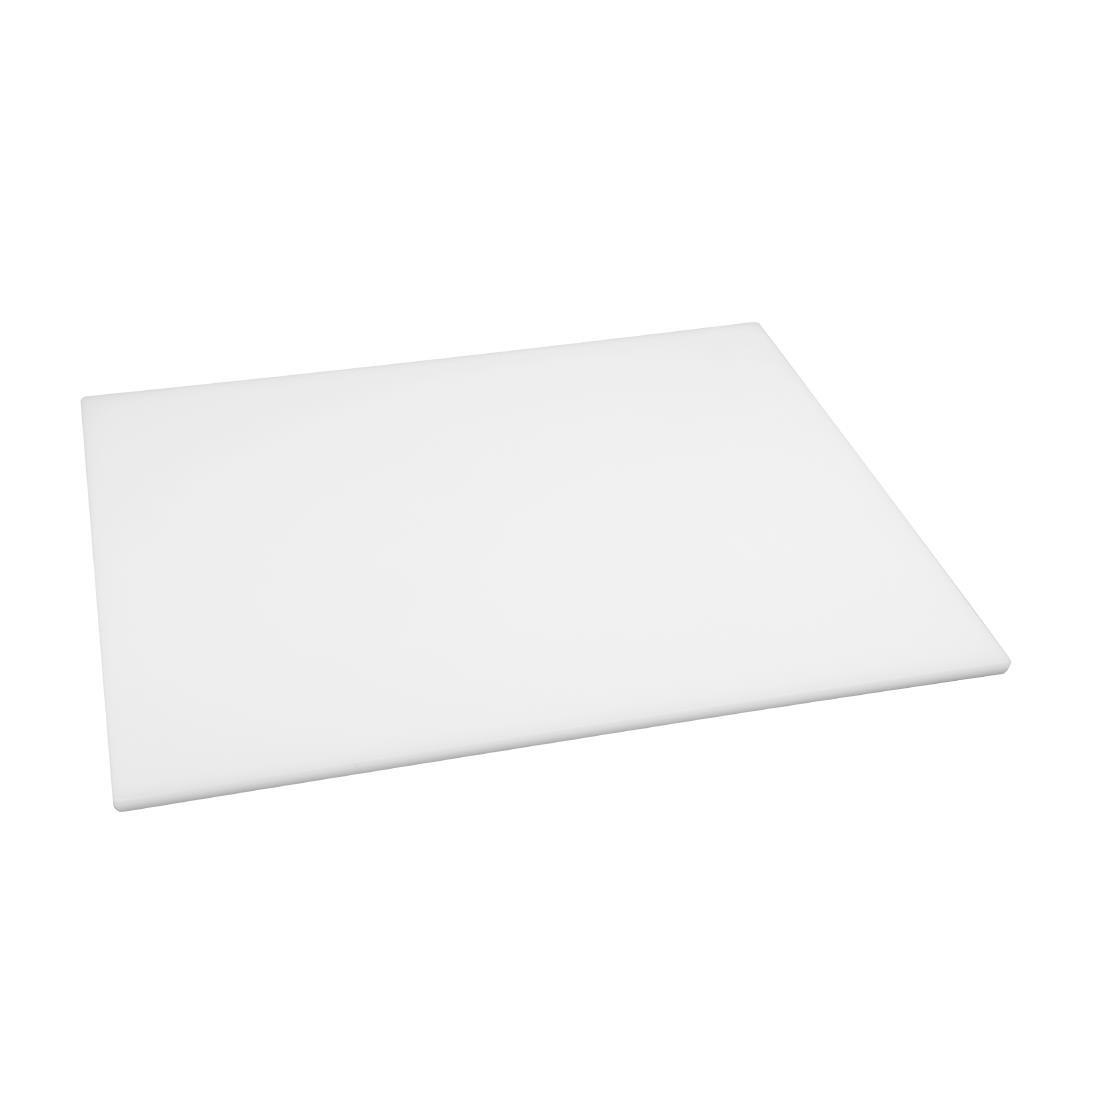 Hygiplas Low Density White Chopping Board Standard - J252  - 2